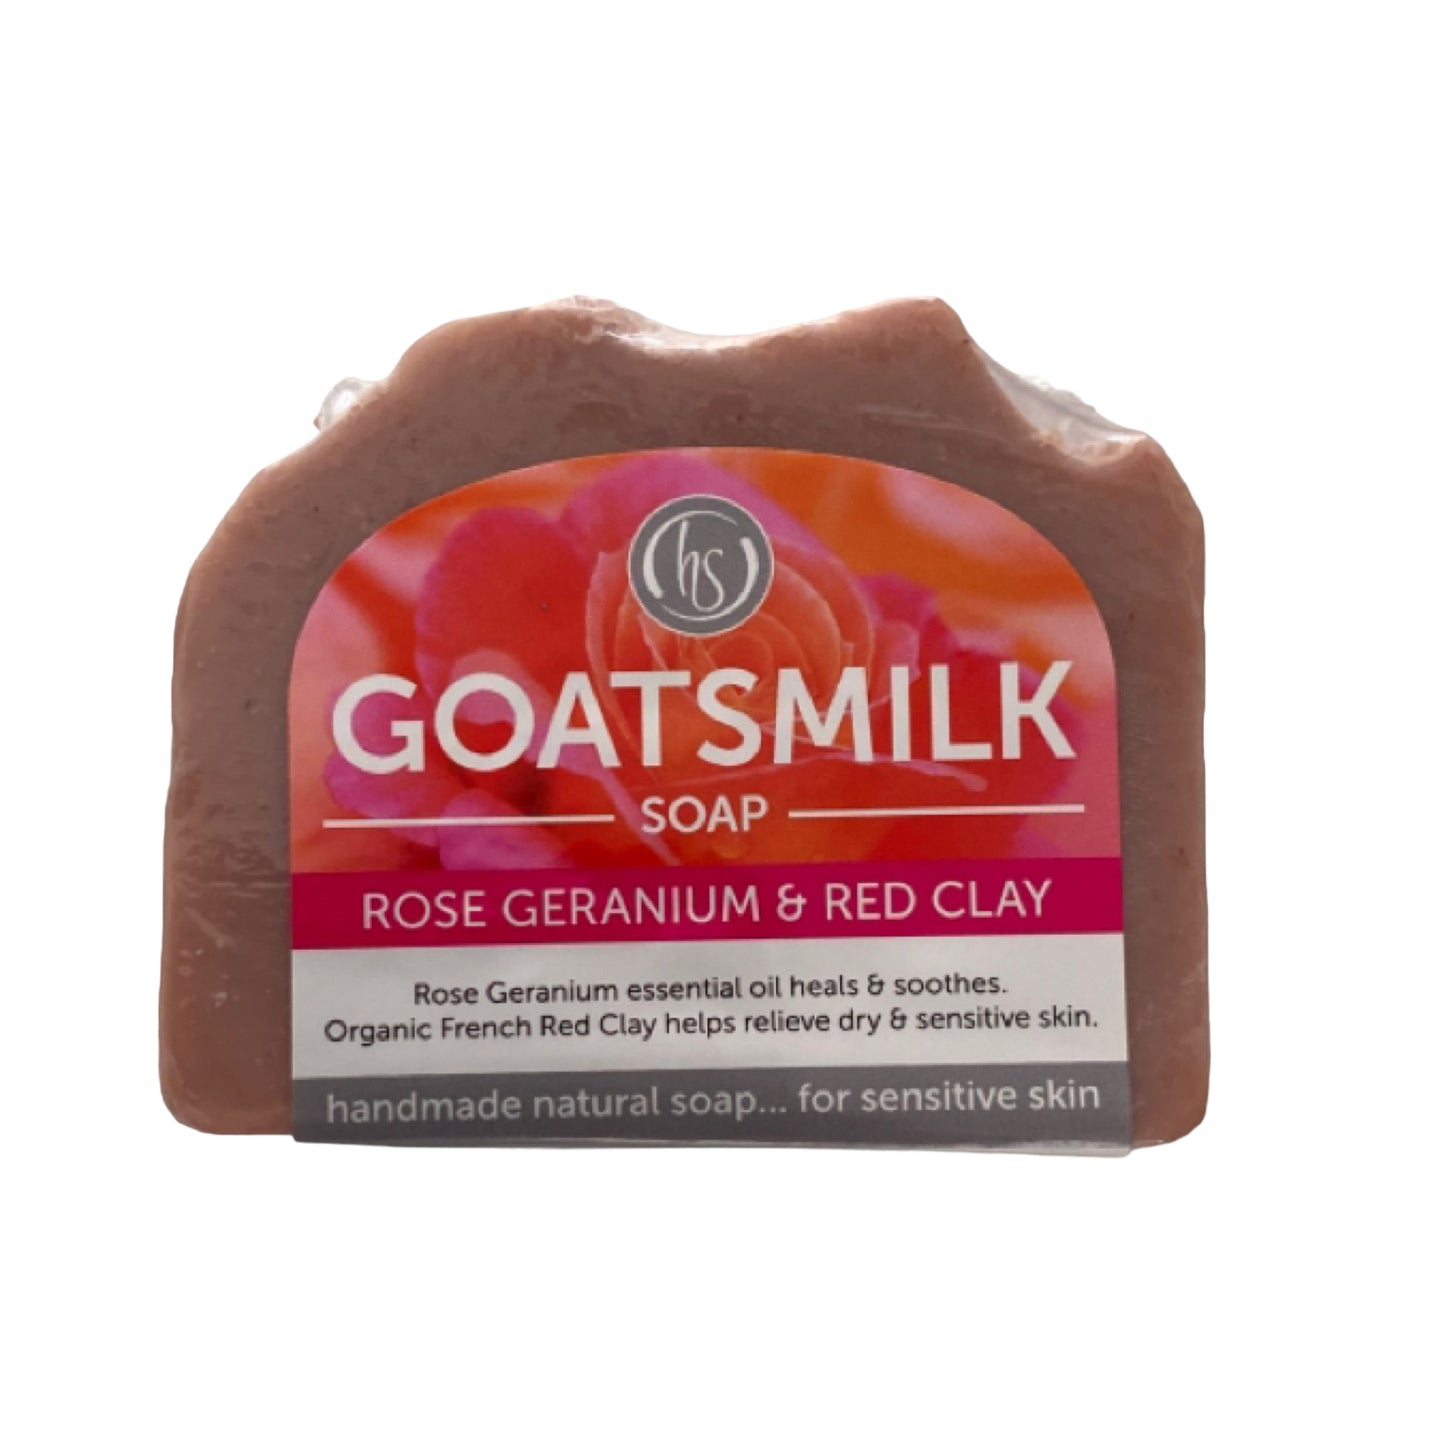 Garden Believe Gardener Stone Goatmilk Soap Gift